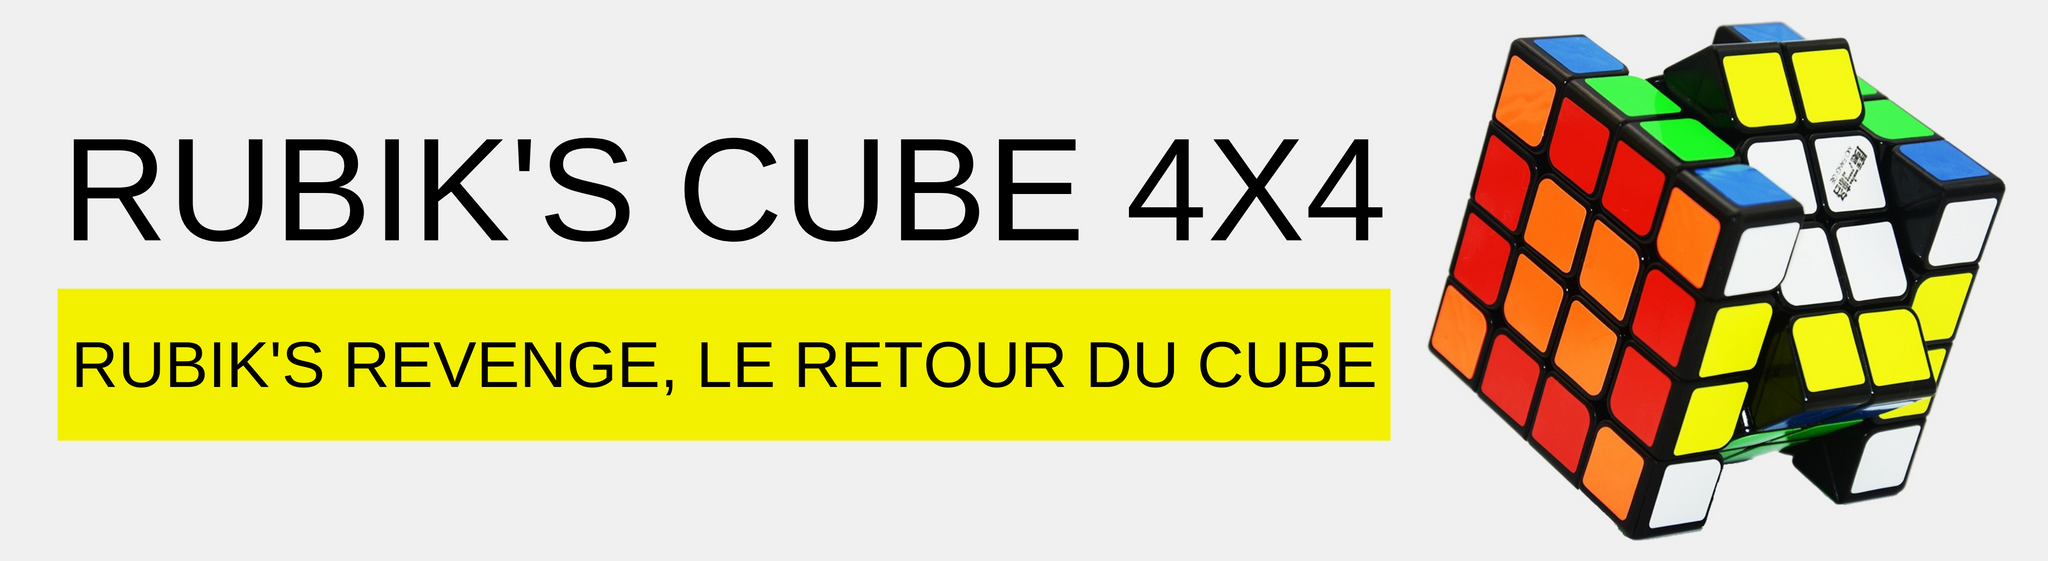 rubik's cube 4x4x4